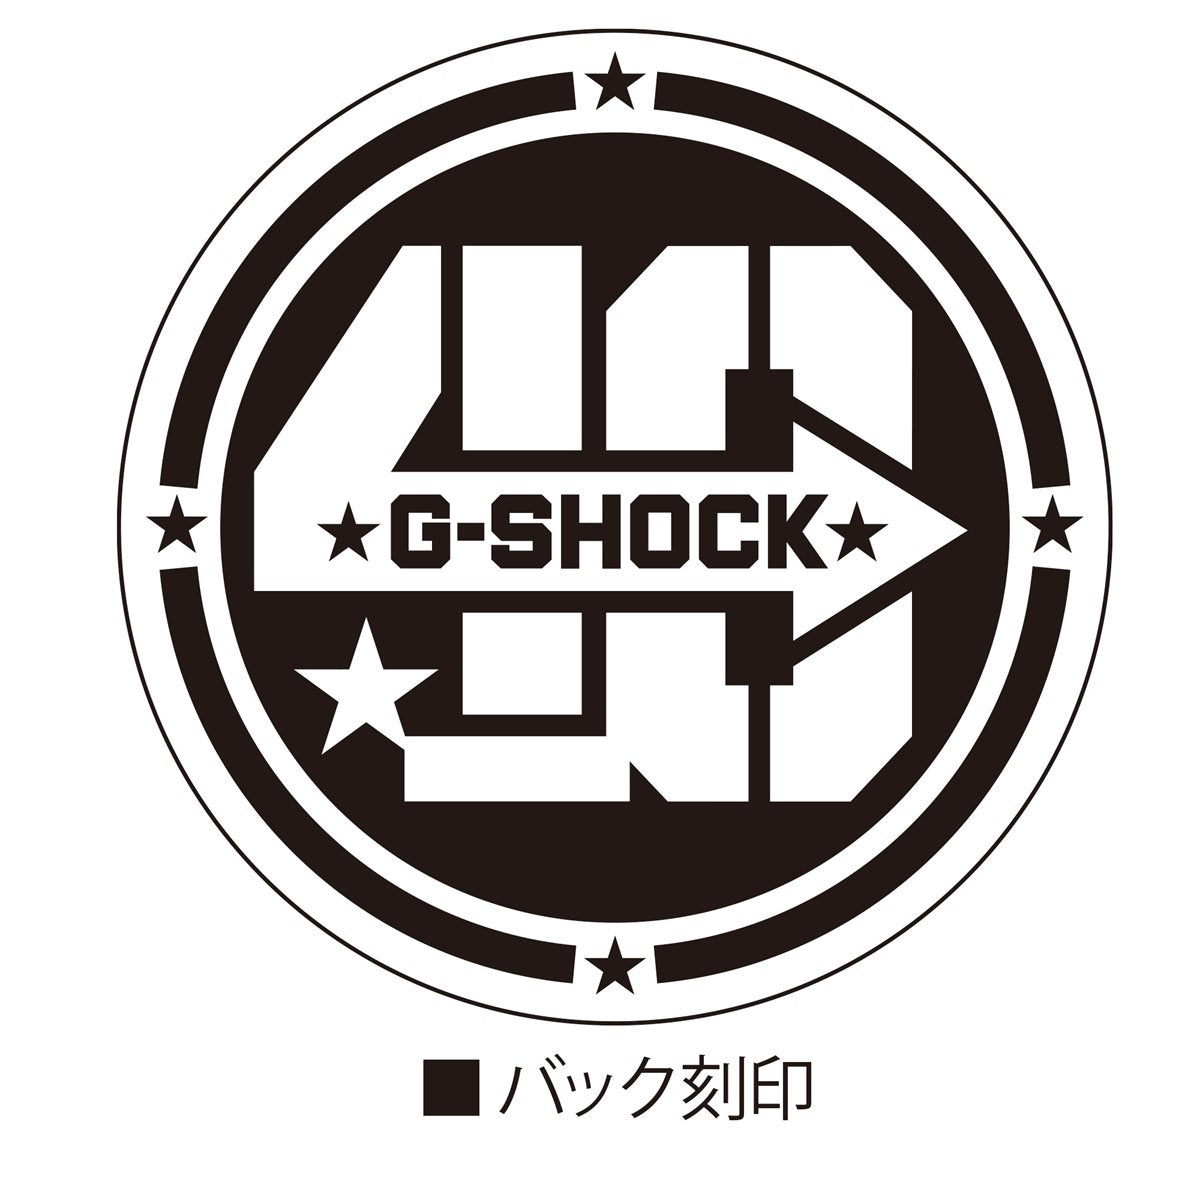 G-SHOCK カシオ Gショック CASIO 40th Anniversary RECRYSTALLIZED SERIES GMW-B5000PG-9JR タフソーラー 電波時計 腕時計 メンズ リクリスタライズド フルメタル ゴールド